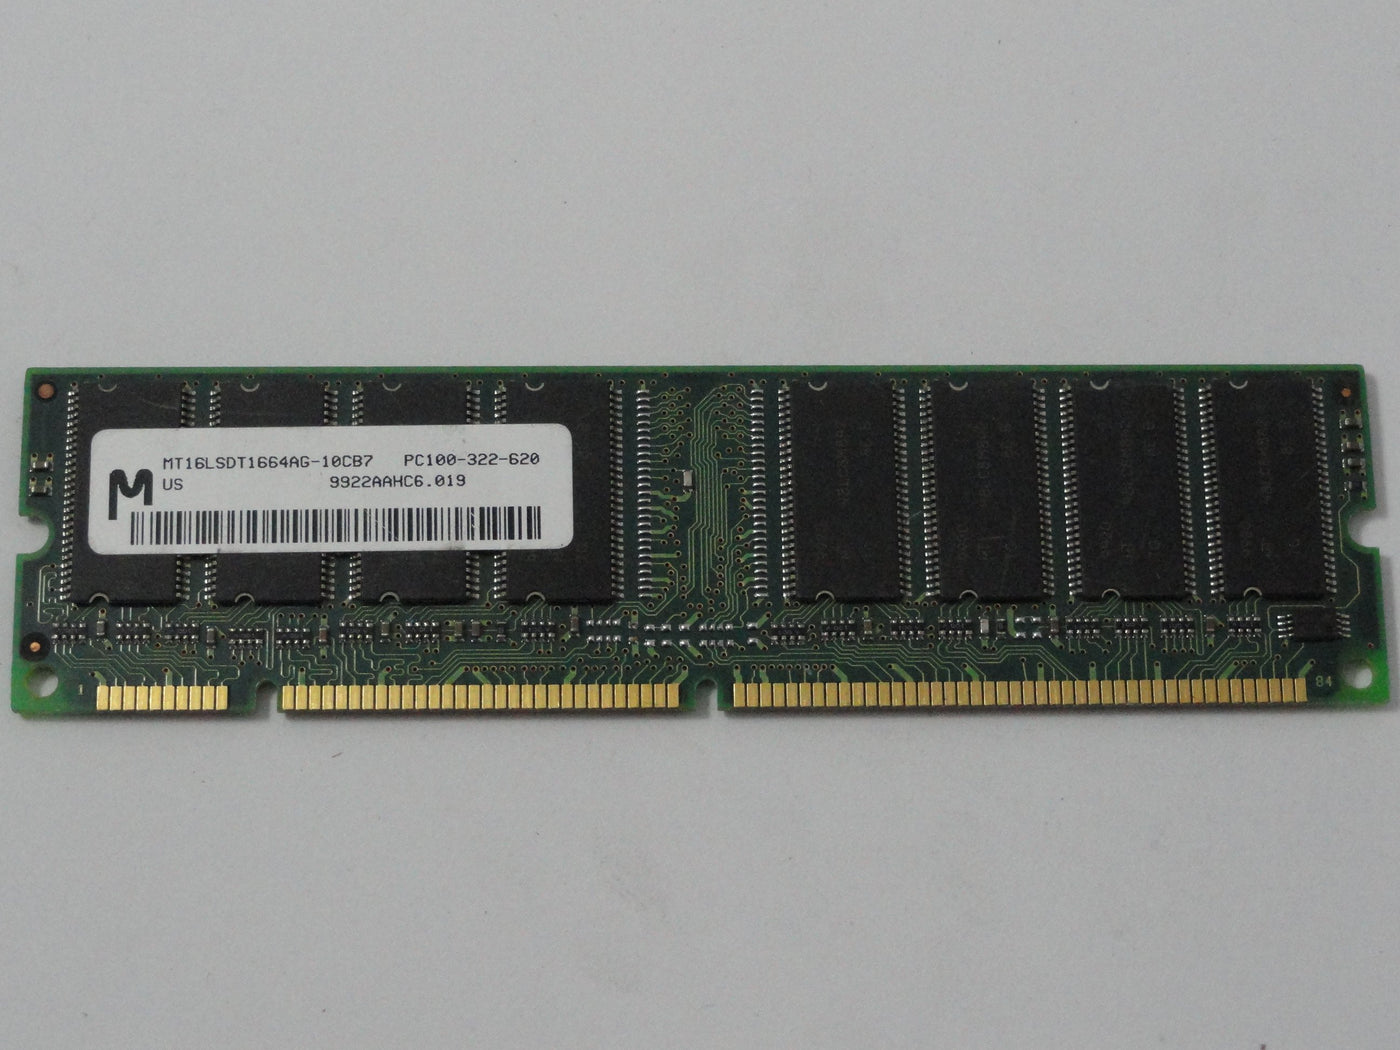 MC6581_MT16LSDT1664AG-10CB7_128MB PC100 100MHZ 168PIN CL3 SDRAM DIMM - Image2